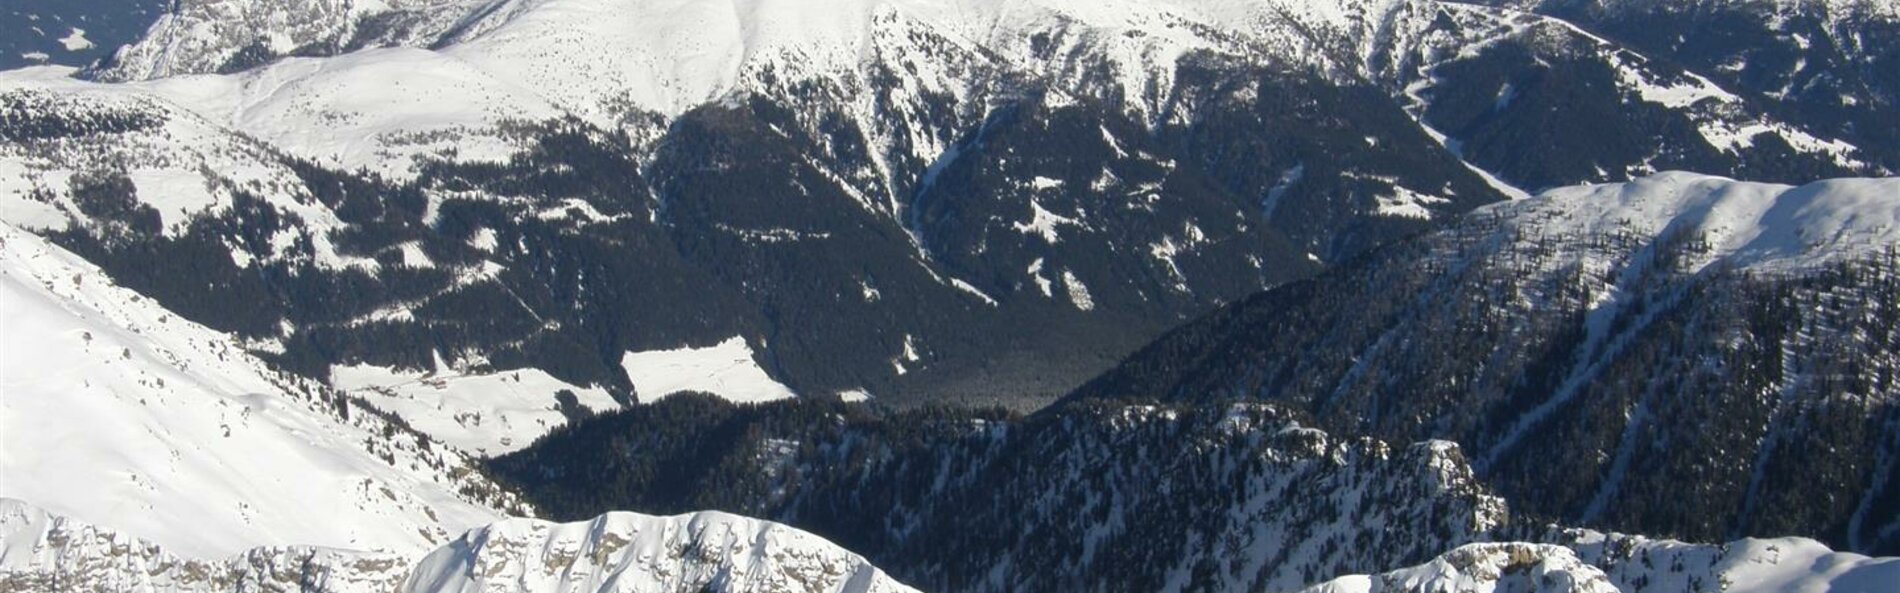 View from the Carnic ridge towards north © Land Tirol